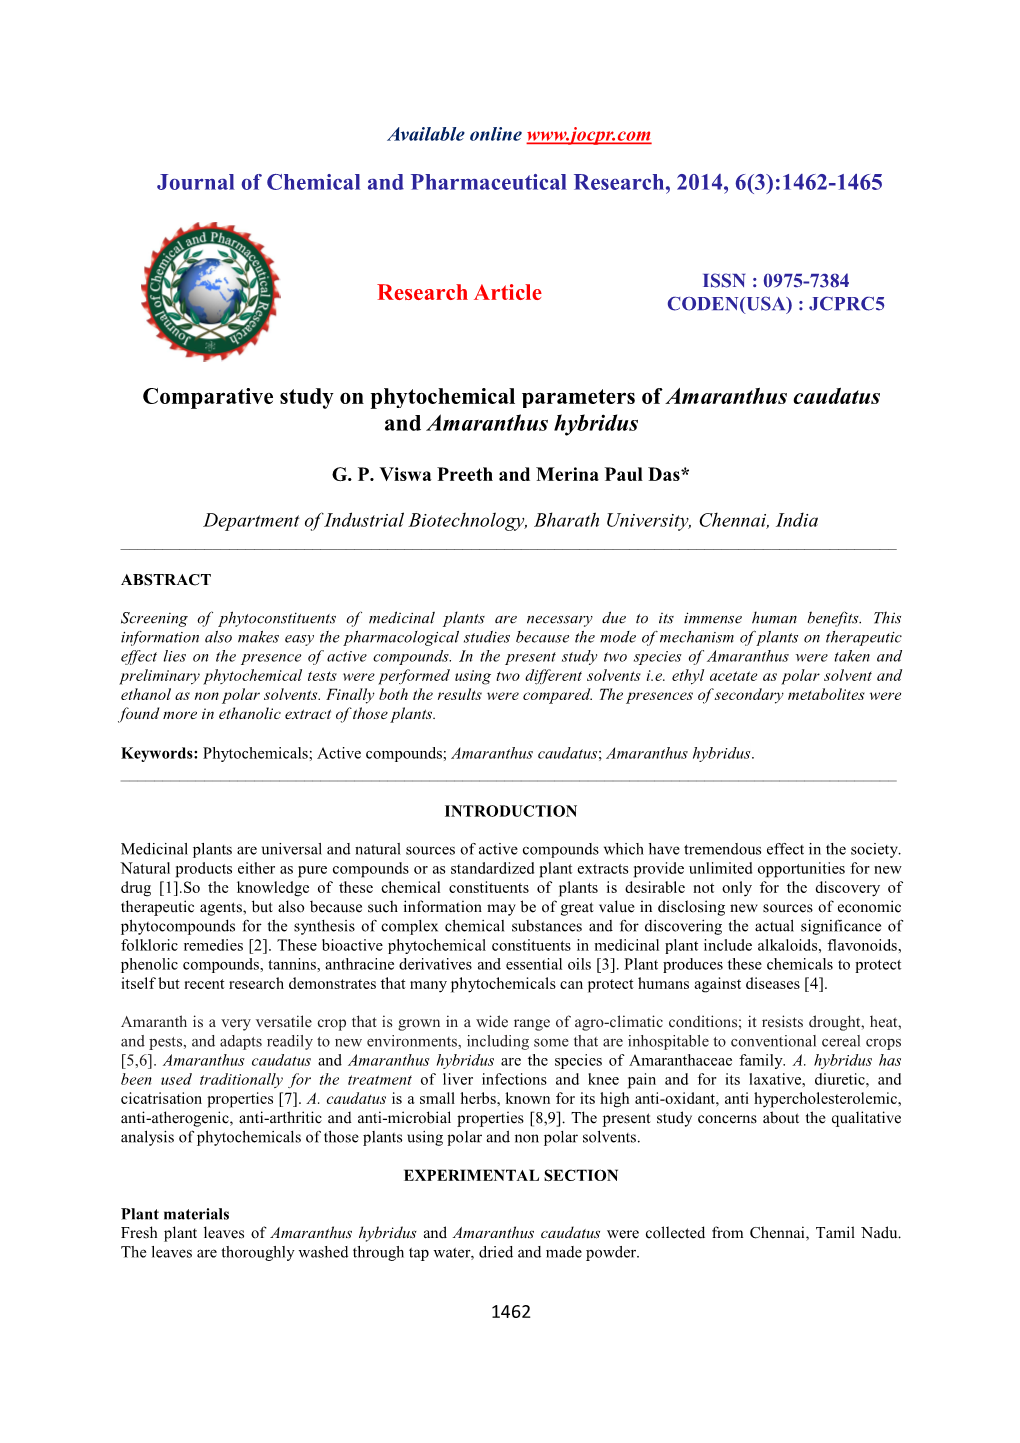 Comparative Study on Phytochemical Parameters of Amaranthus Caudatus and Amaranthus Hybridus